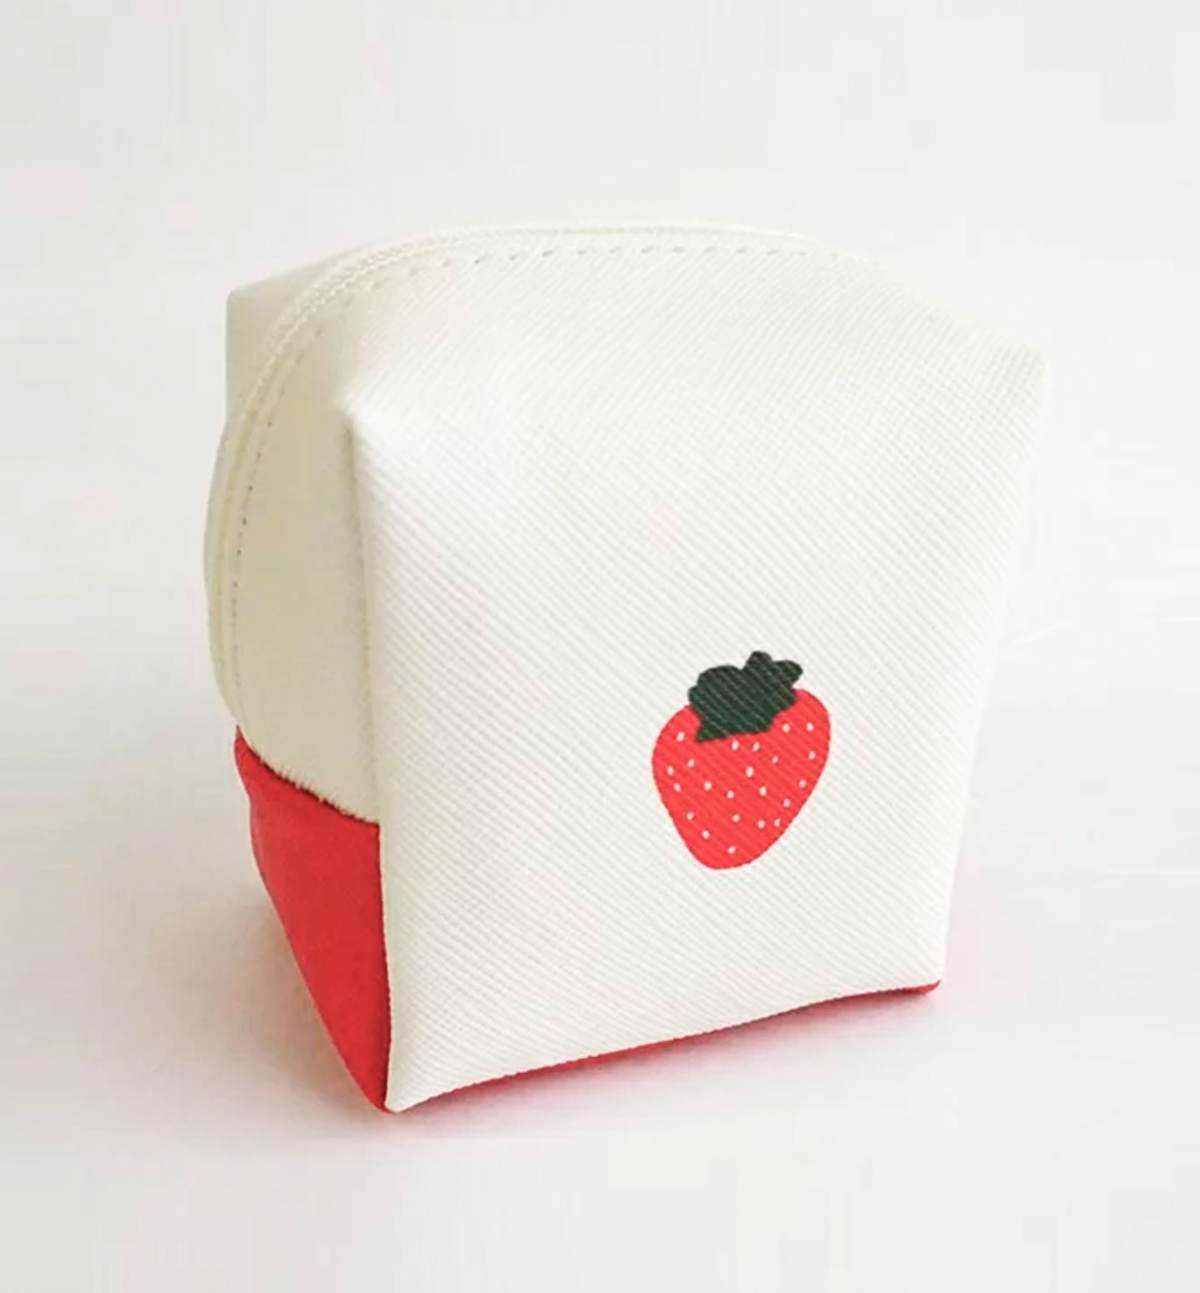 Miffy Mini Cube Pouch [Strawberry]